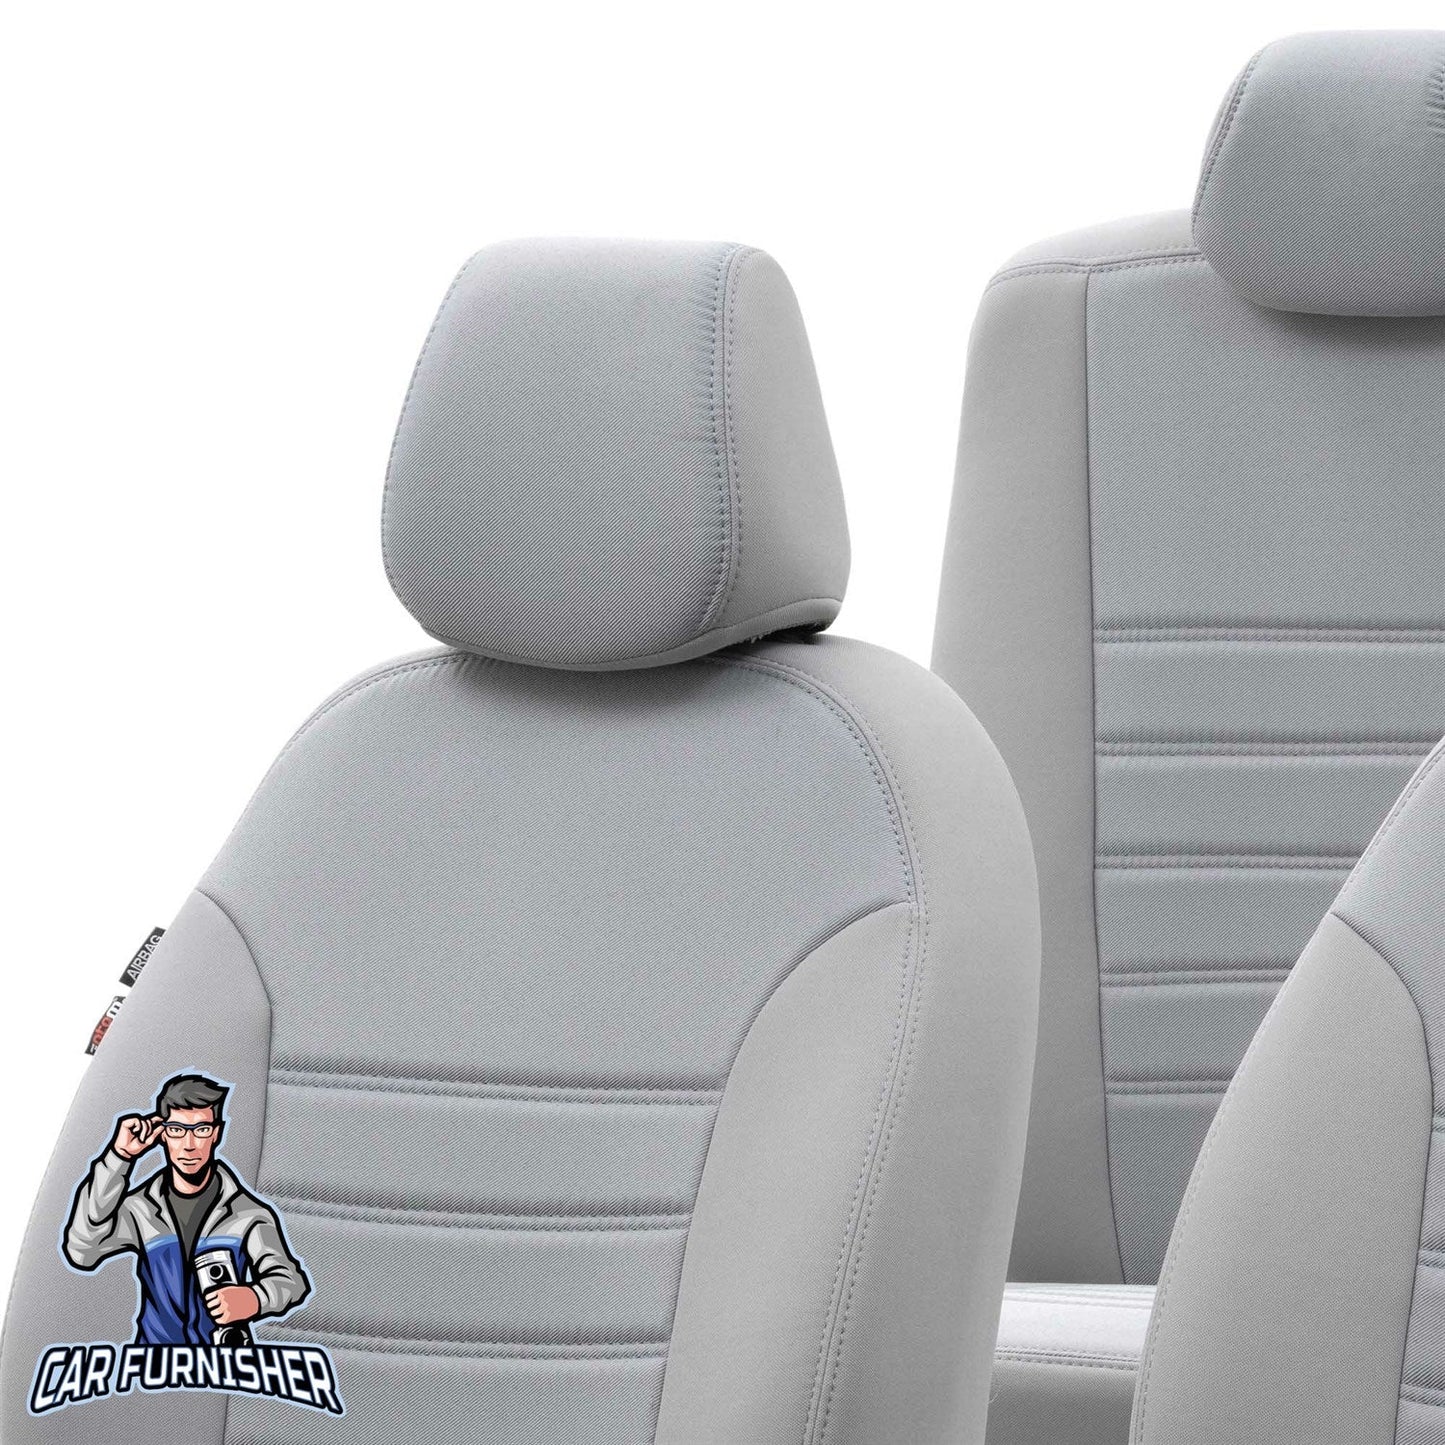 Volkswagen Tiguan Seat Cover Original Jacquard Design Dark Beige Jacquard Fabric